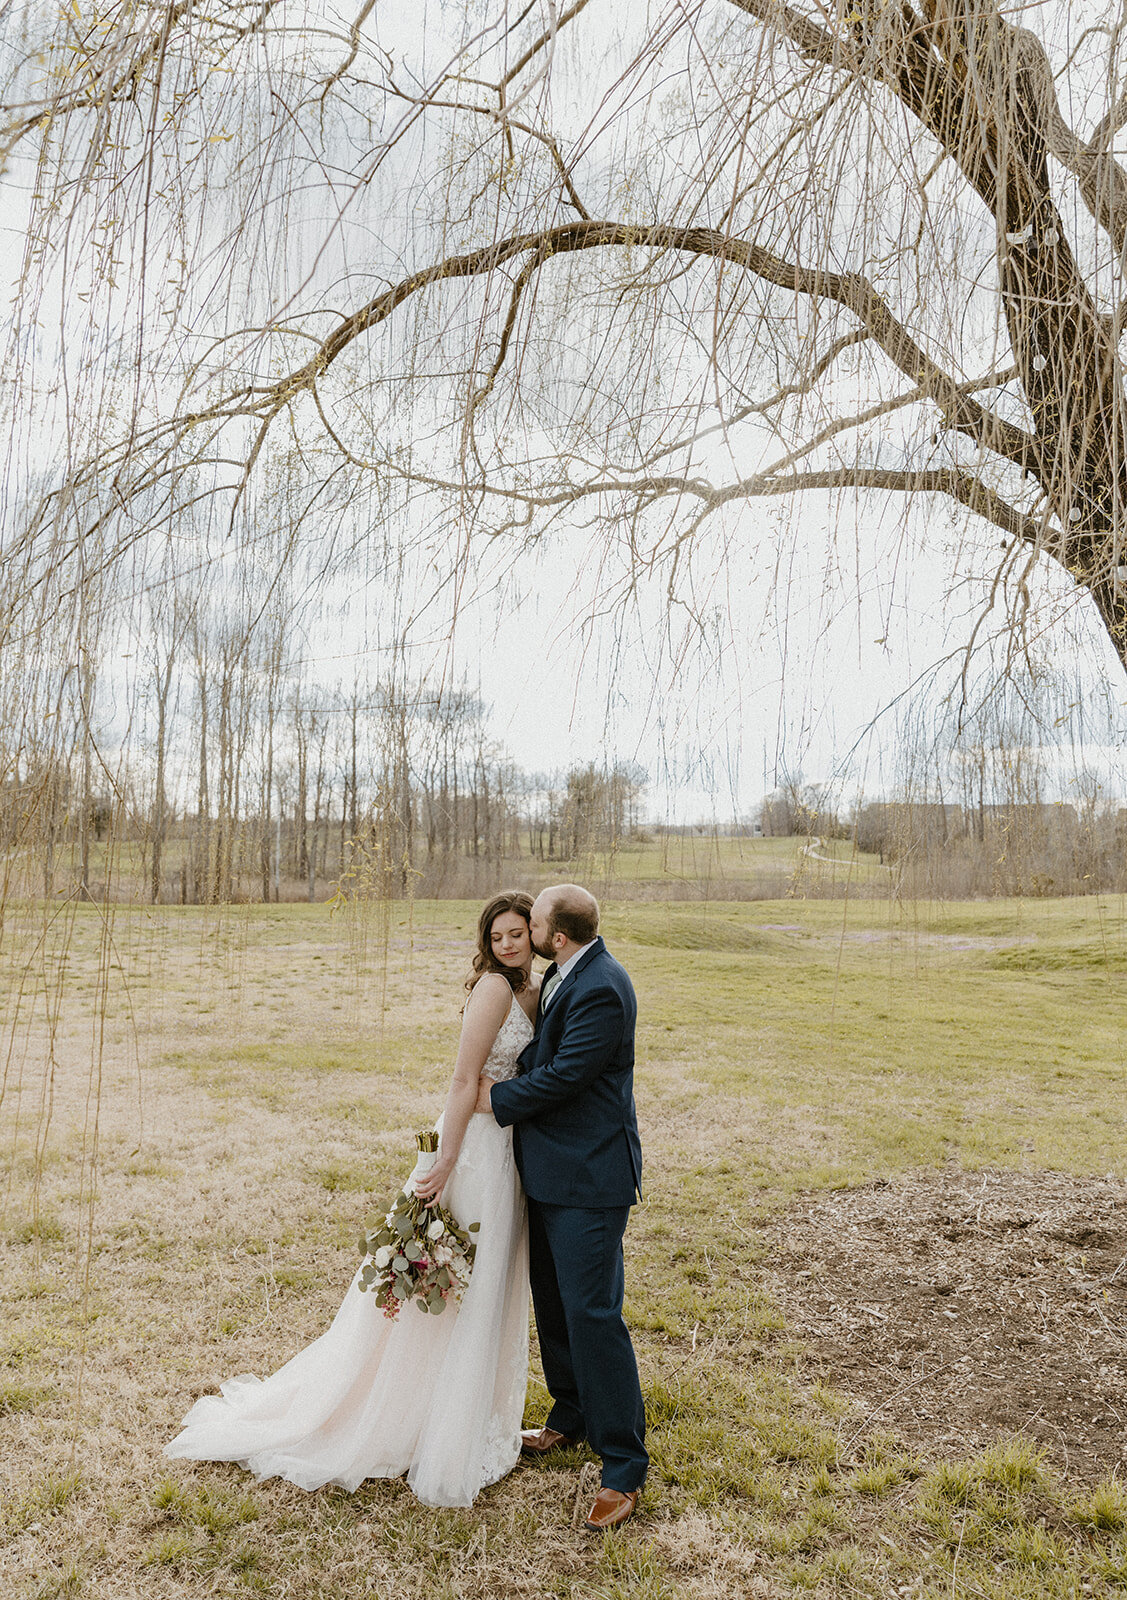 Karis_Marie_Photography_Peter+Emilie_Wedding_The_Ospreys_at_Belmont_Bay_Woodbridge_VA_Bride+Groom_Portraits-98